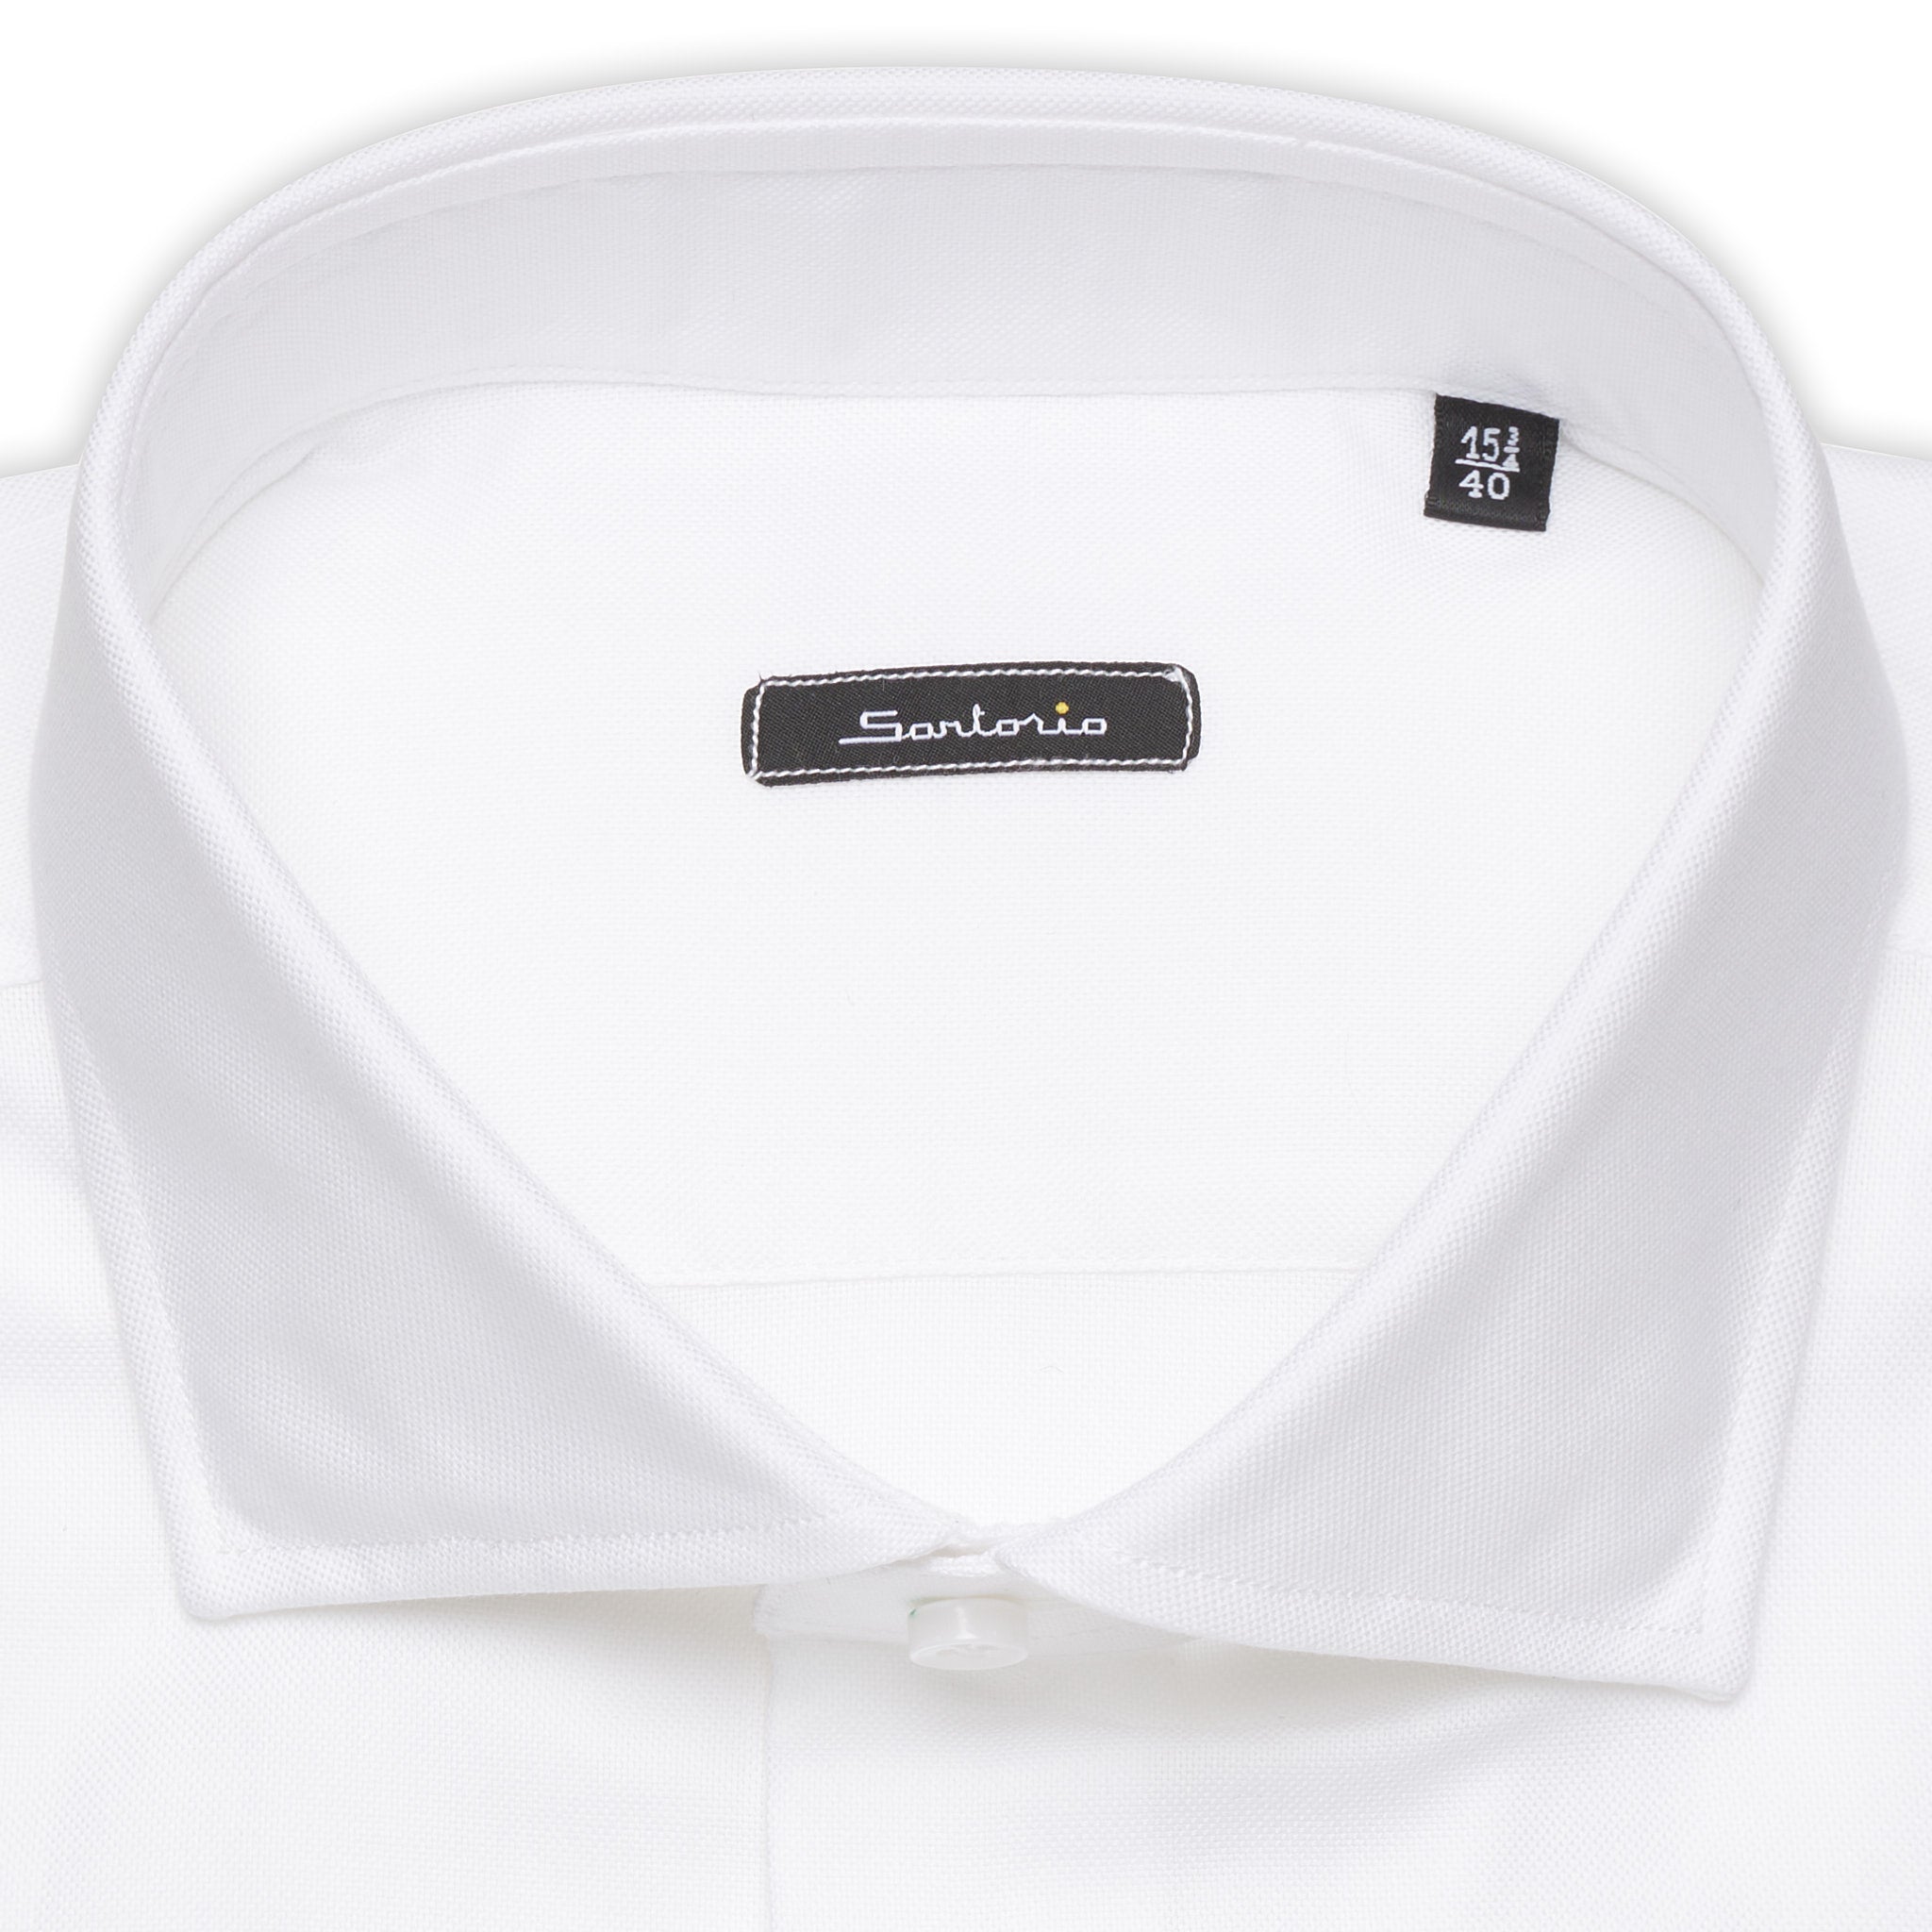 SARTORIO by KITON White Cotton Royal Oxford Dress Shirt NEW Slim Fit SARTORIO